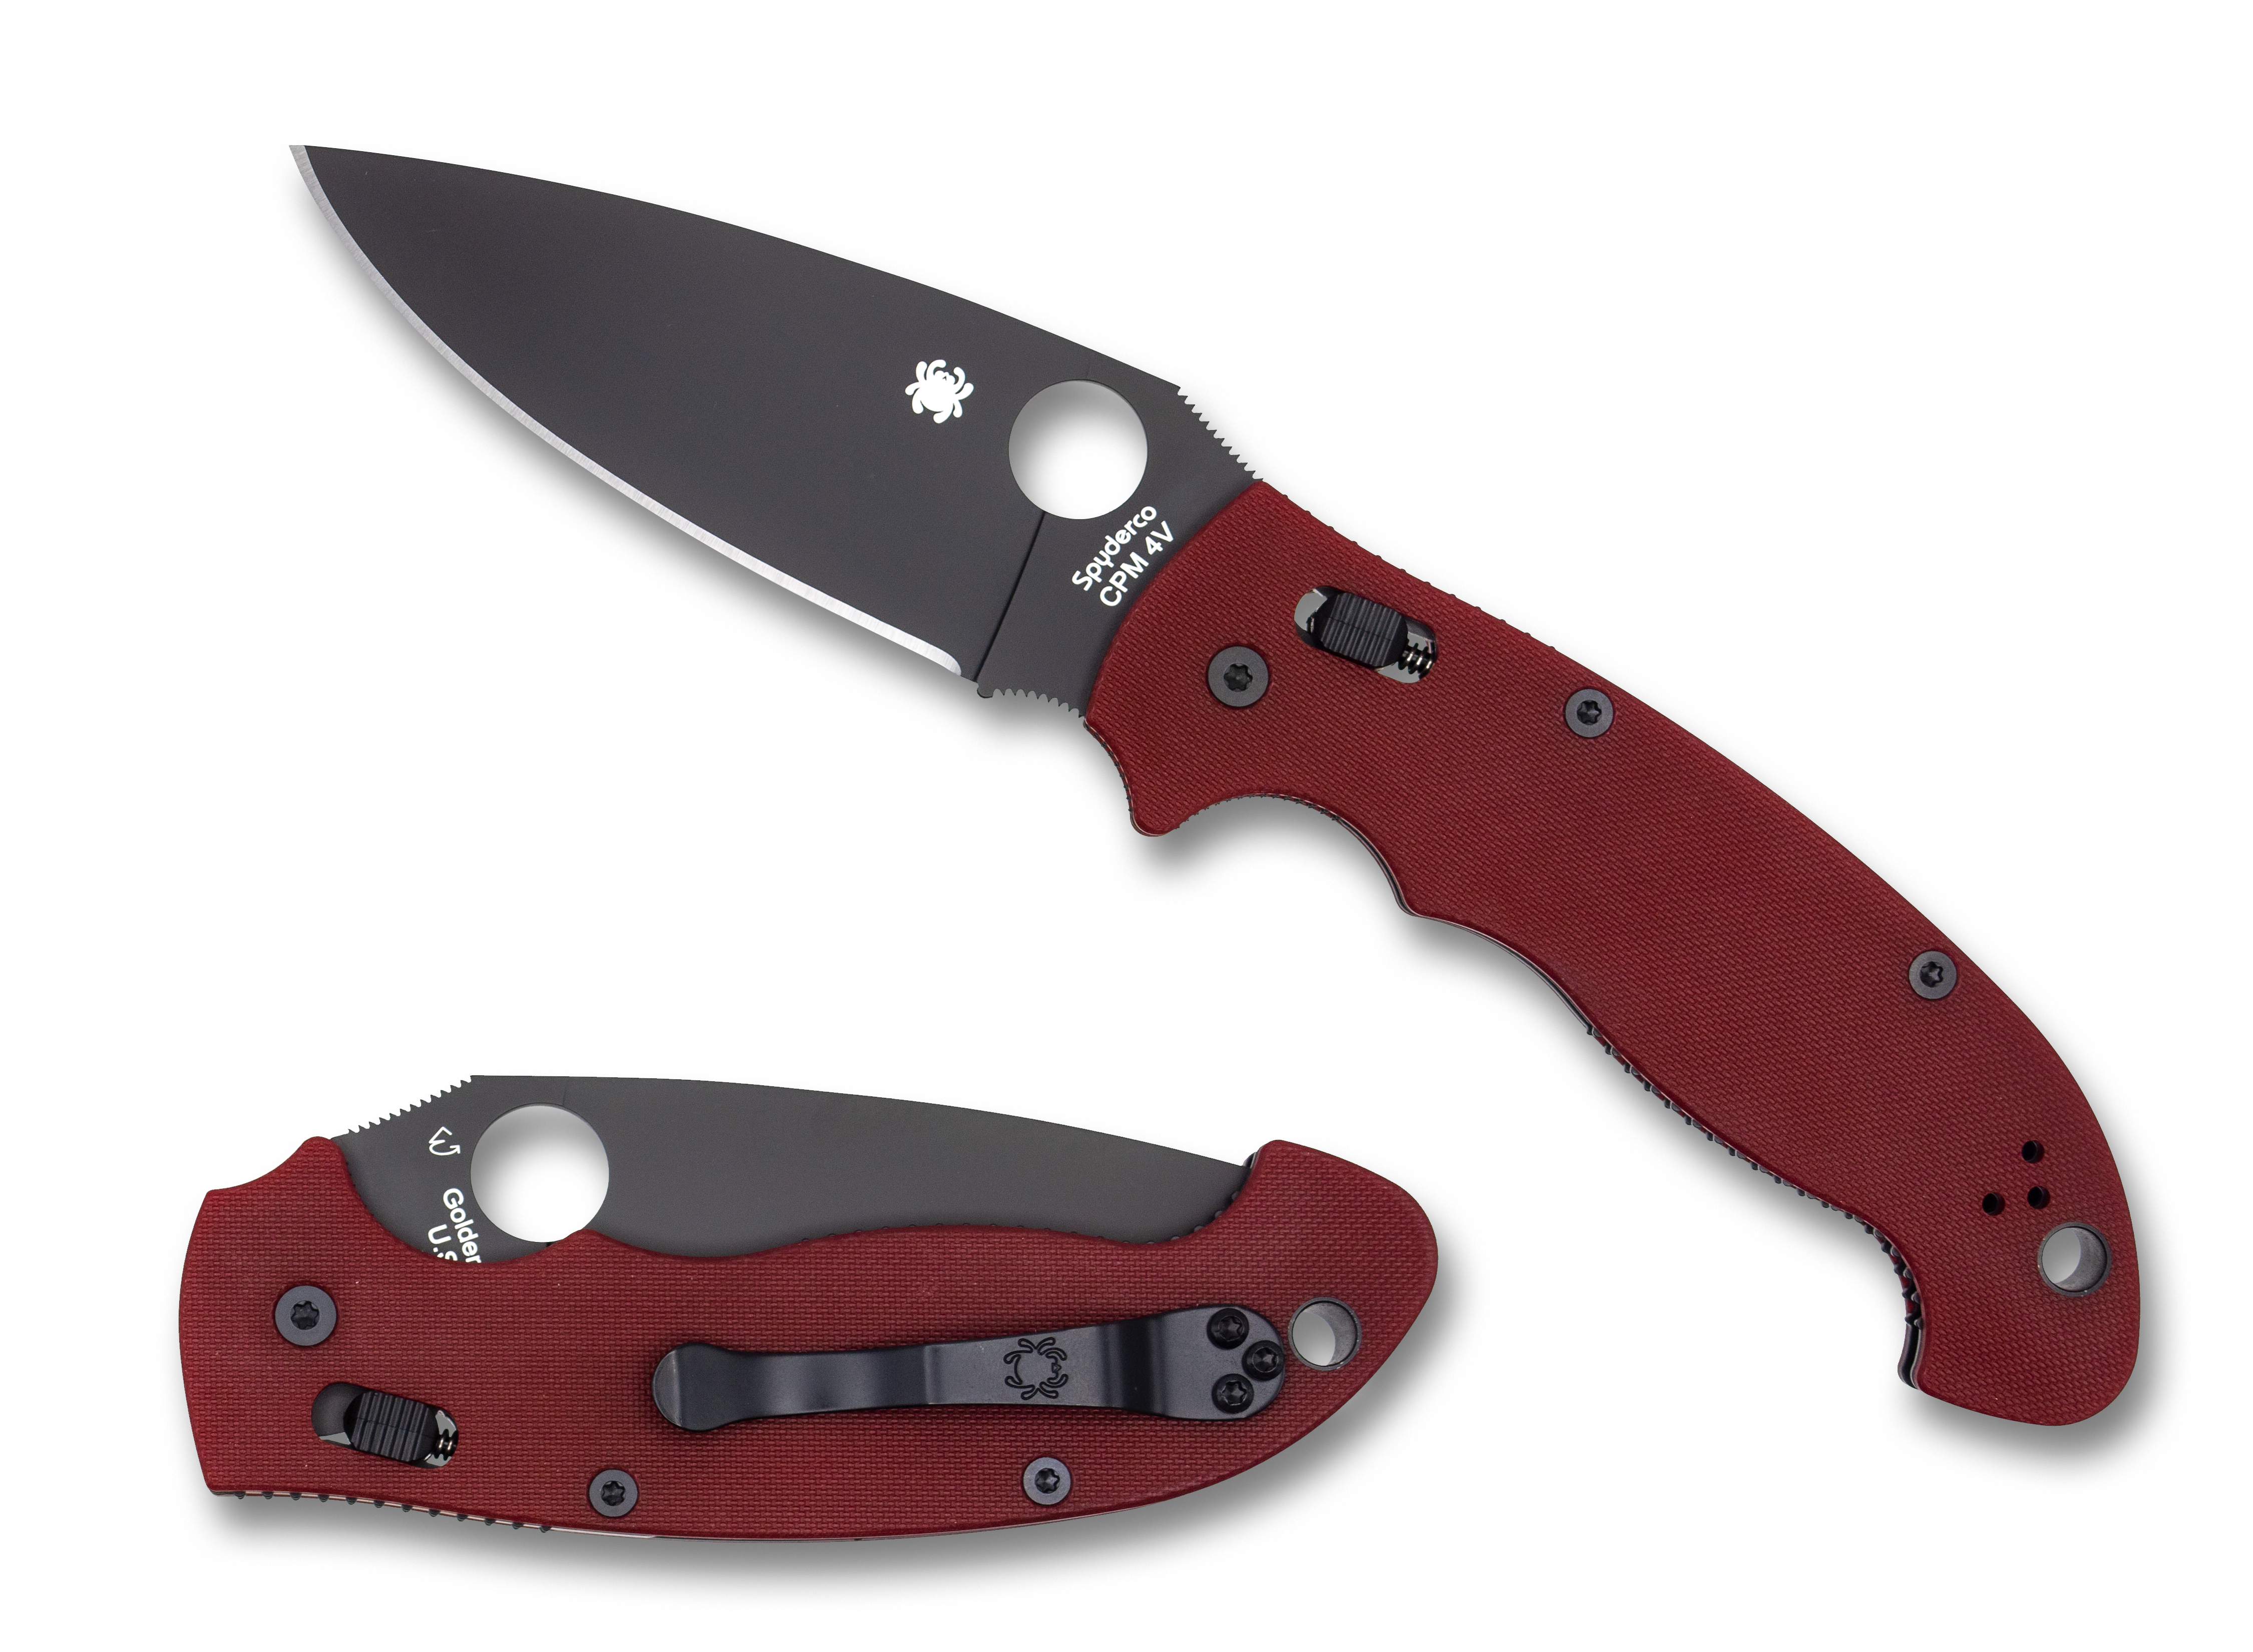 Spyderco Manix 2 XL - Red G10 - Black CPM-4V Blade - St. Nick's Knives Exclusive - C95GPRDBK2